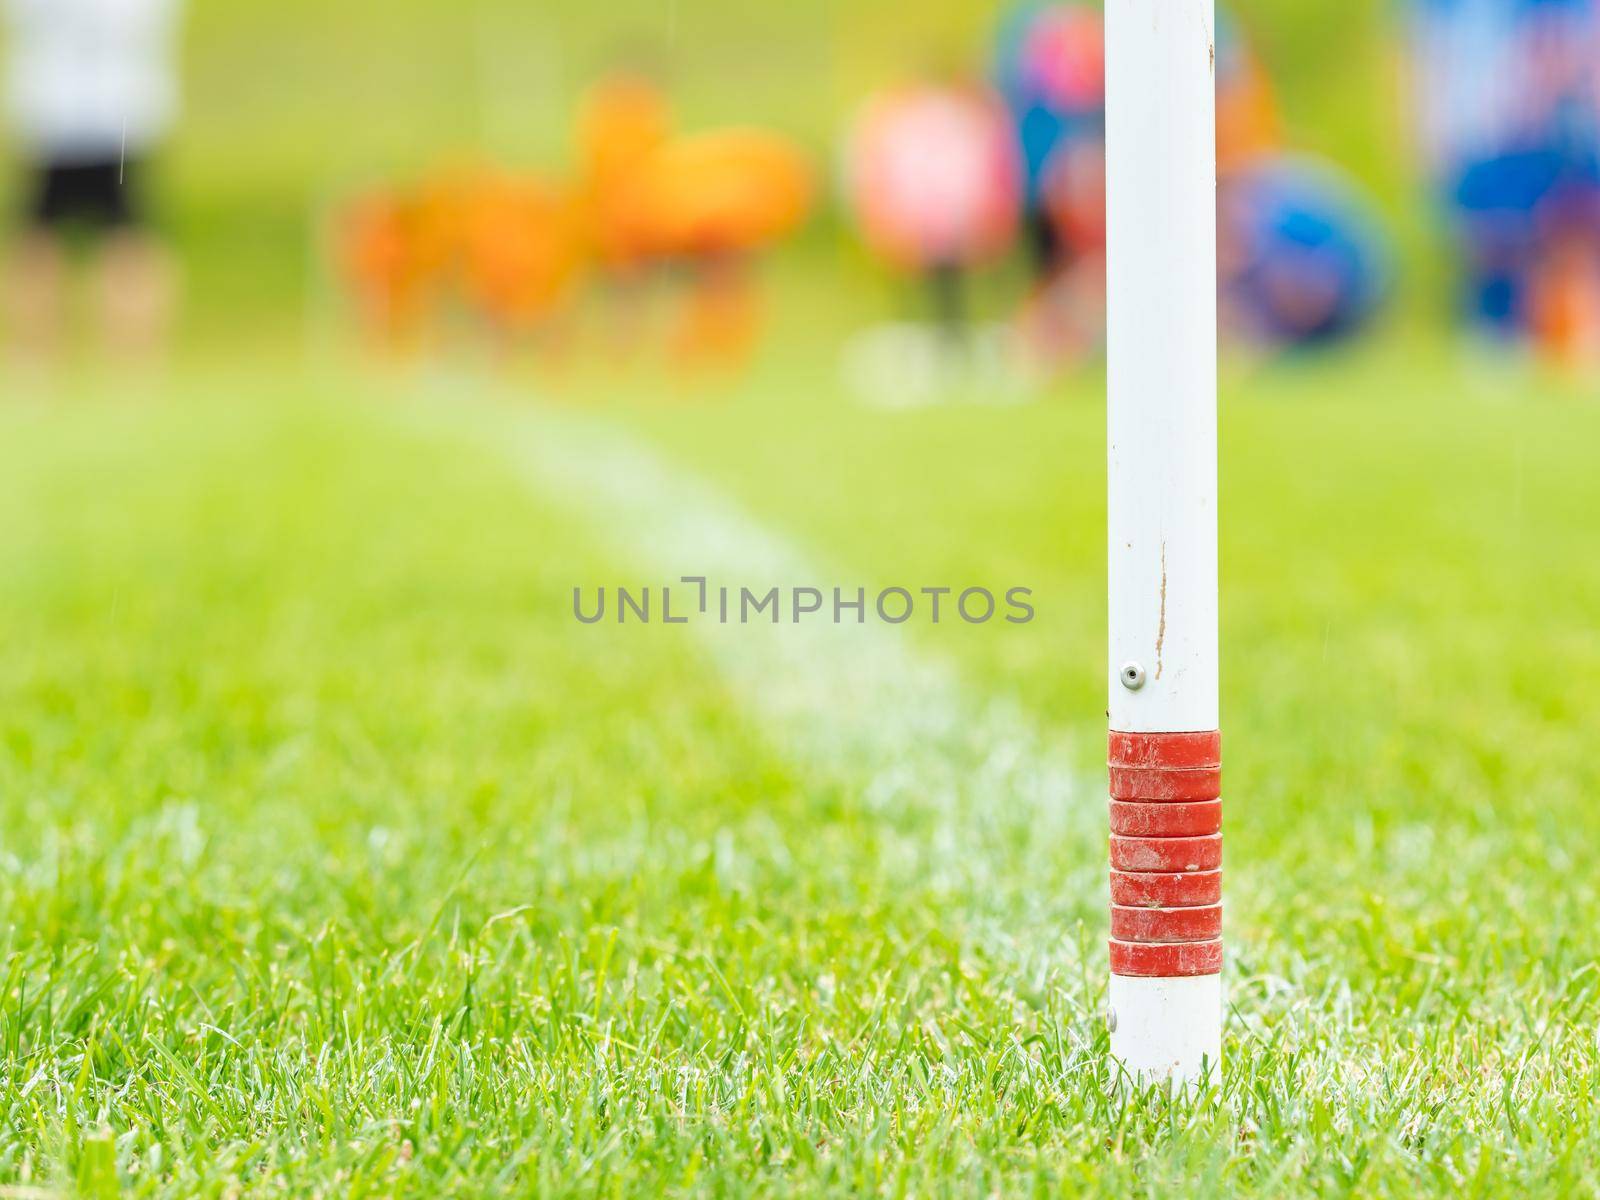 Corner kick spot on artificial grass football stadium, players in blue and orange by rdonar2